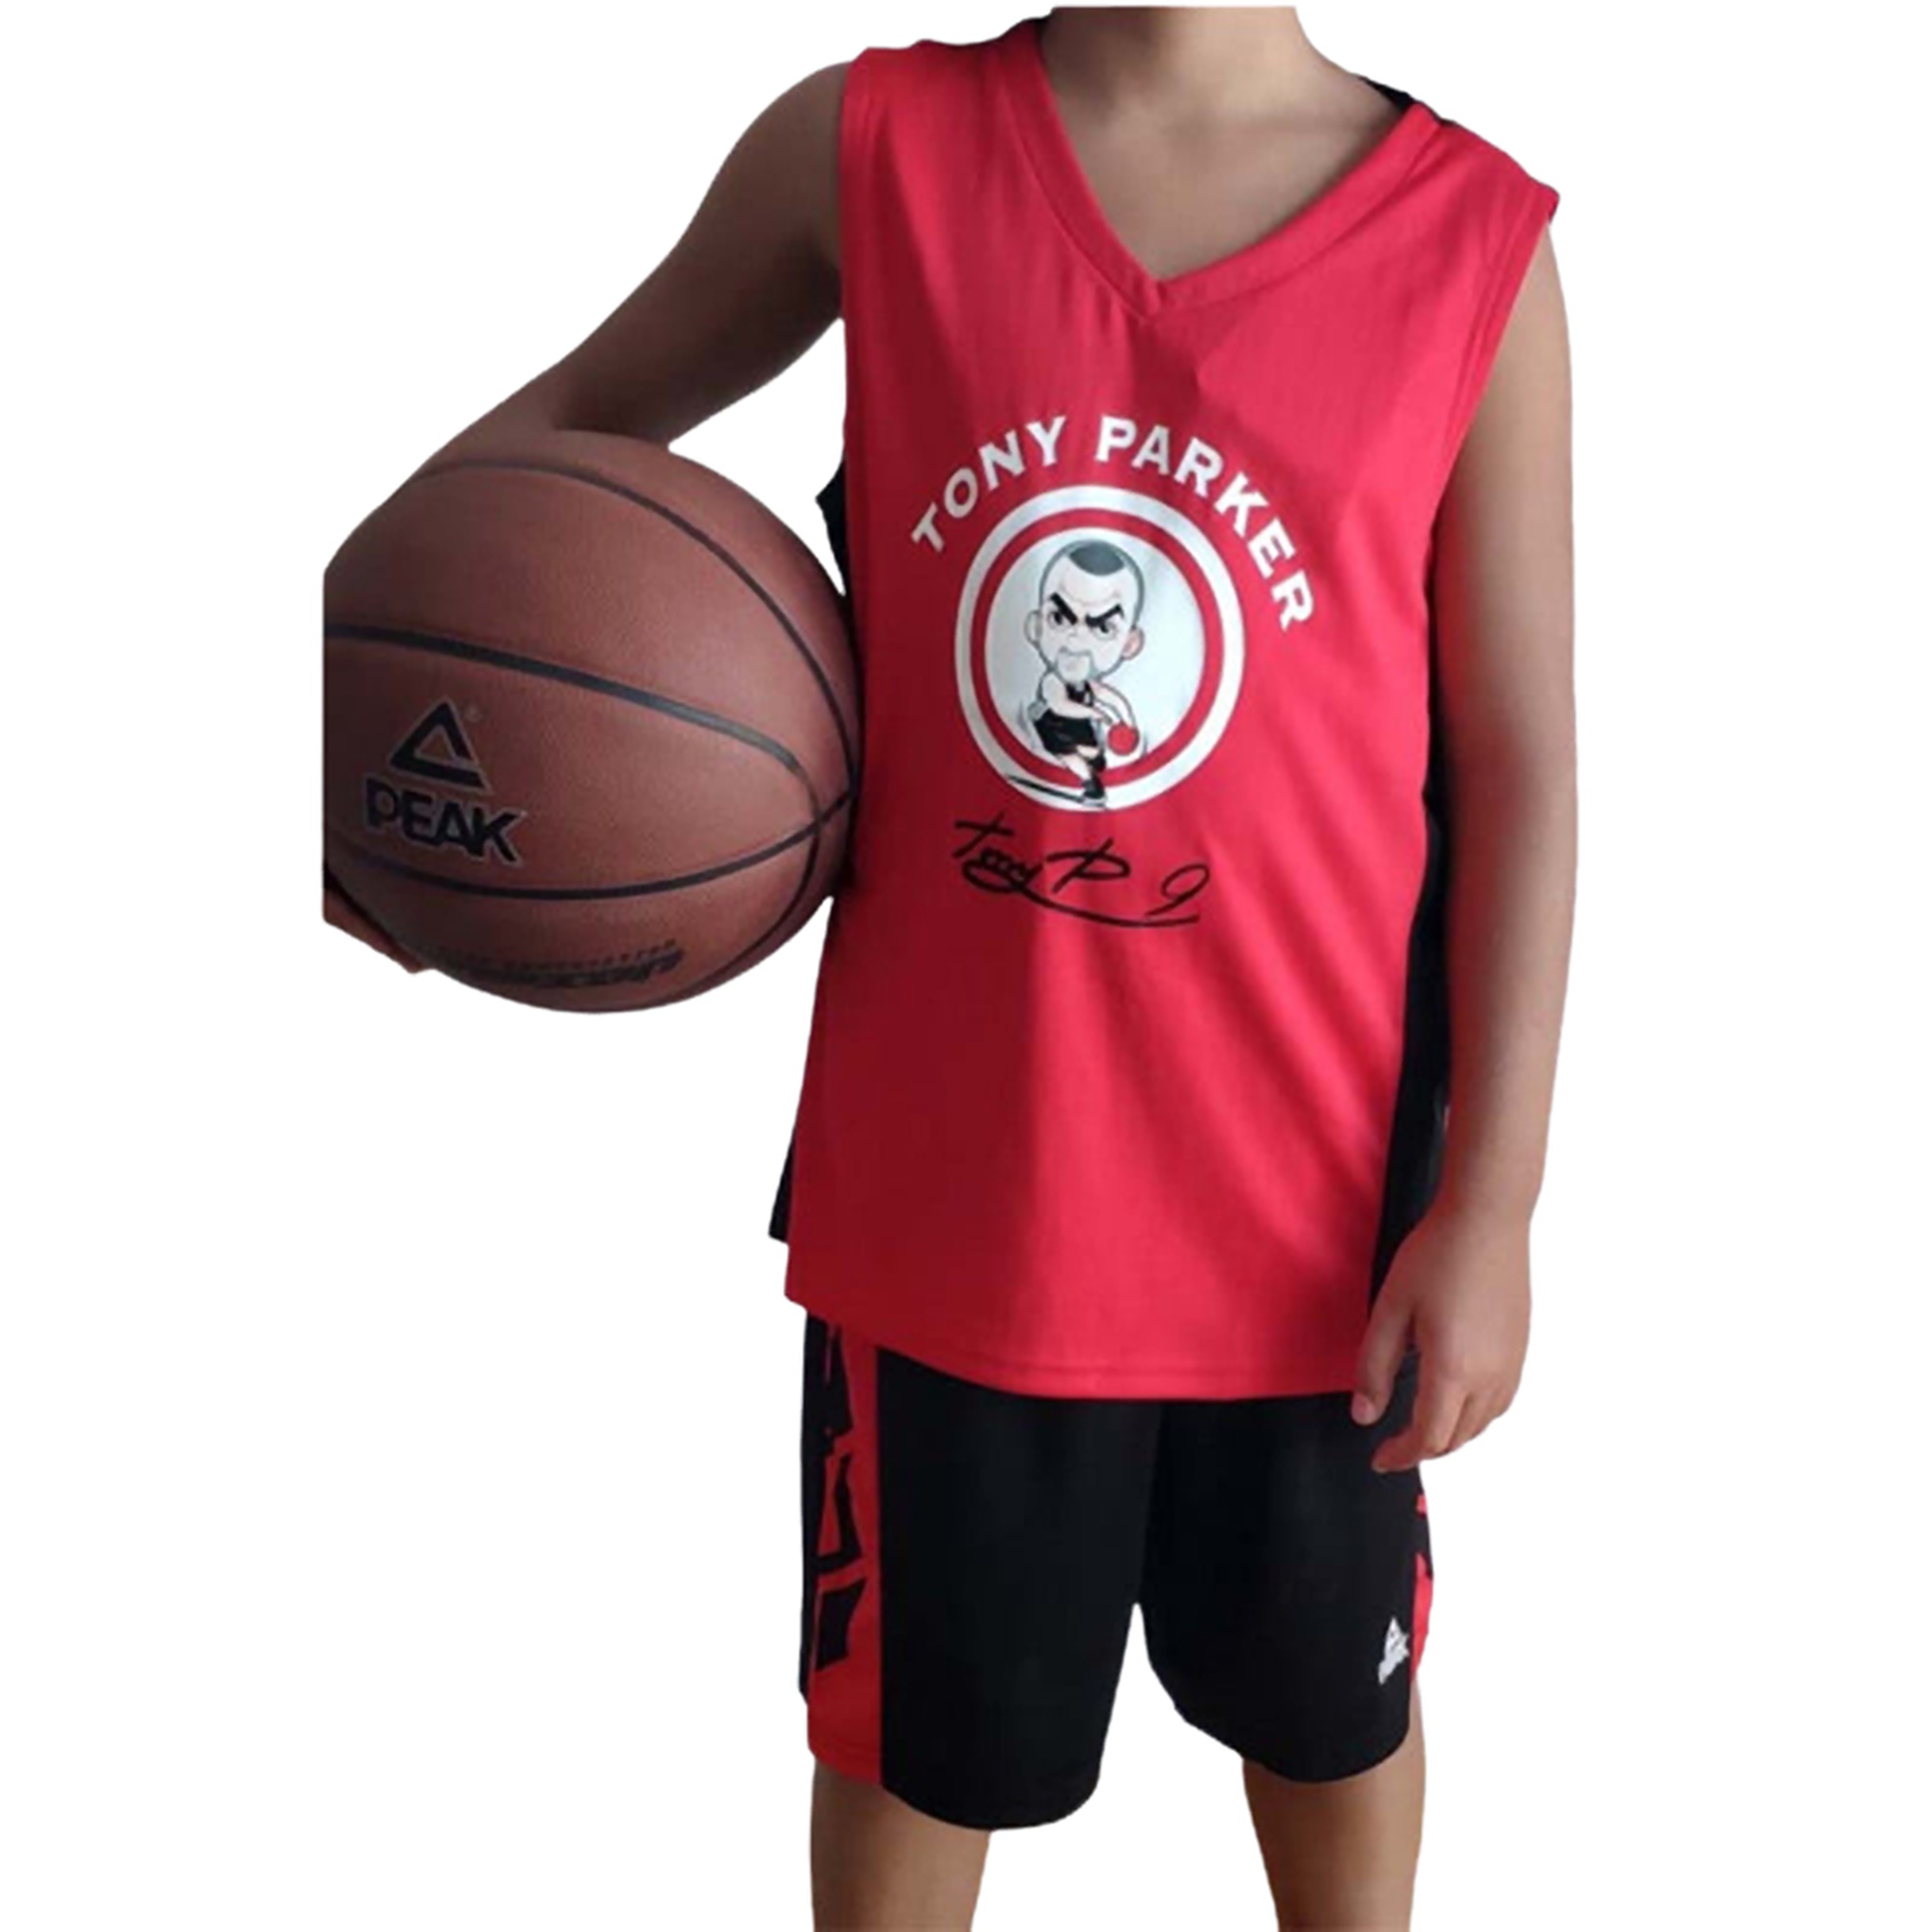 peak-sport-basketball-junior-tony-parker-set-red-black-1.jpg